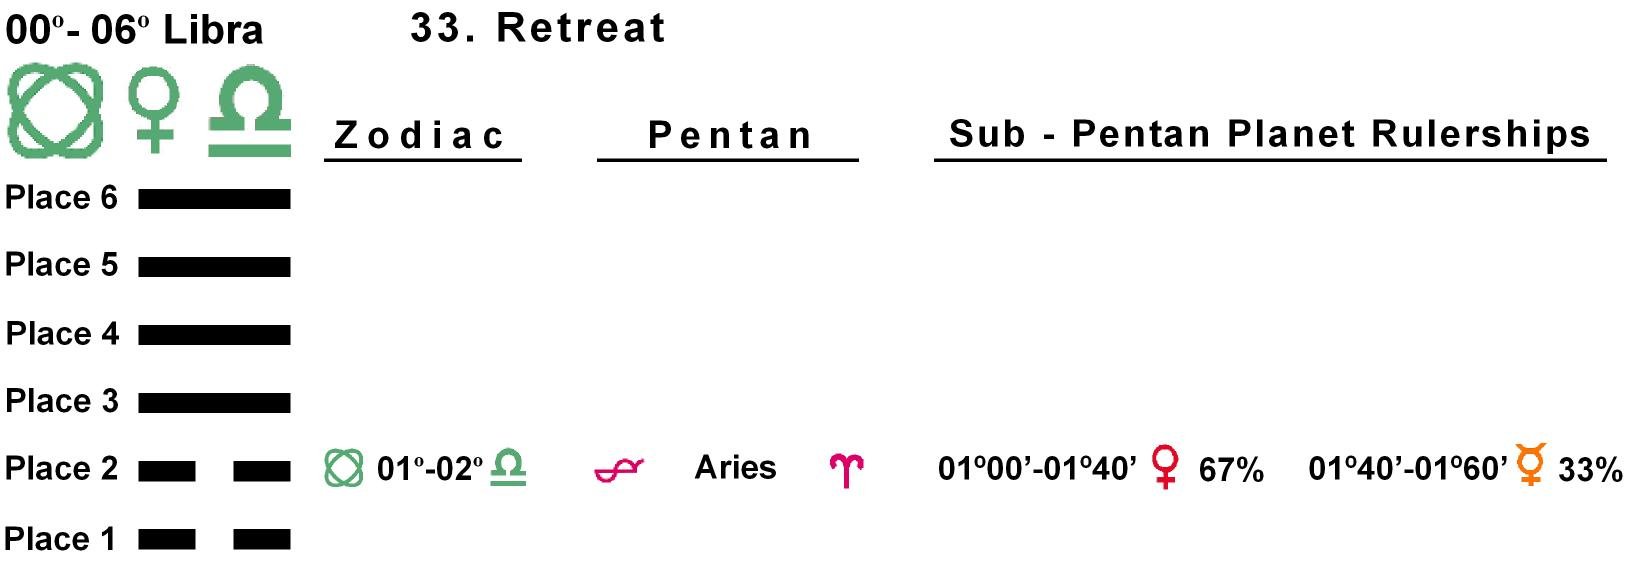 Pent-lines-07LI 01-02 Hx-33 Retreat